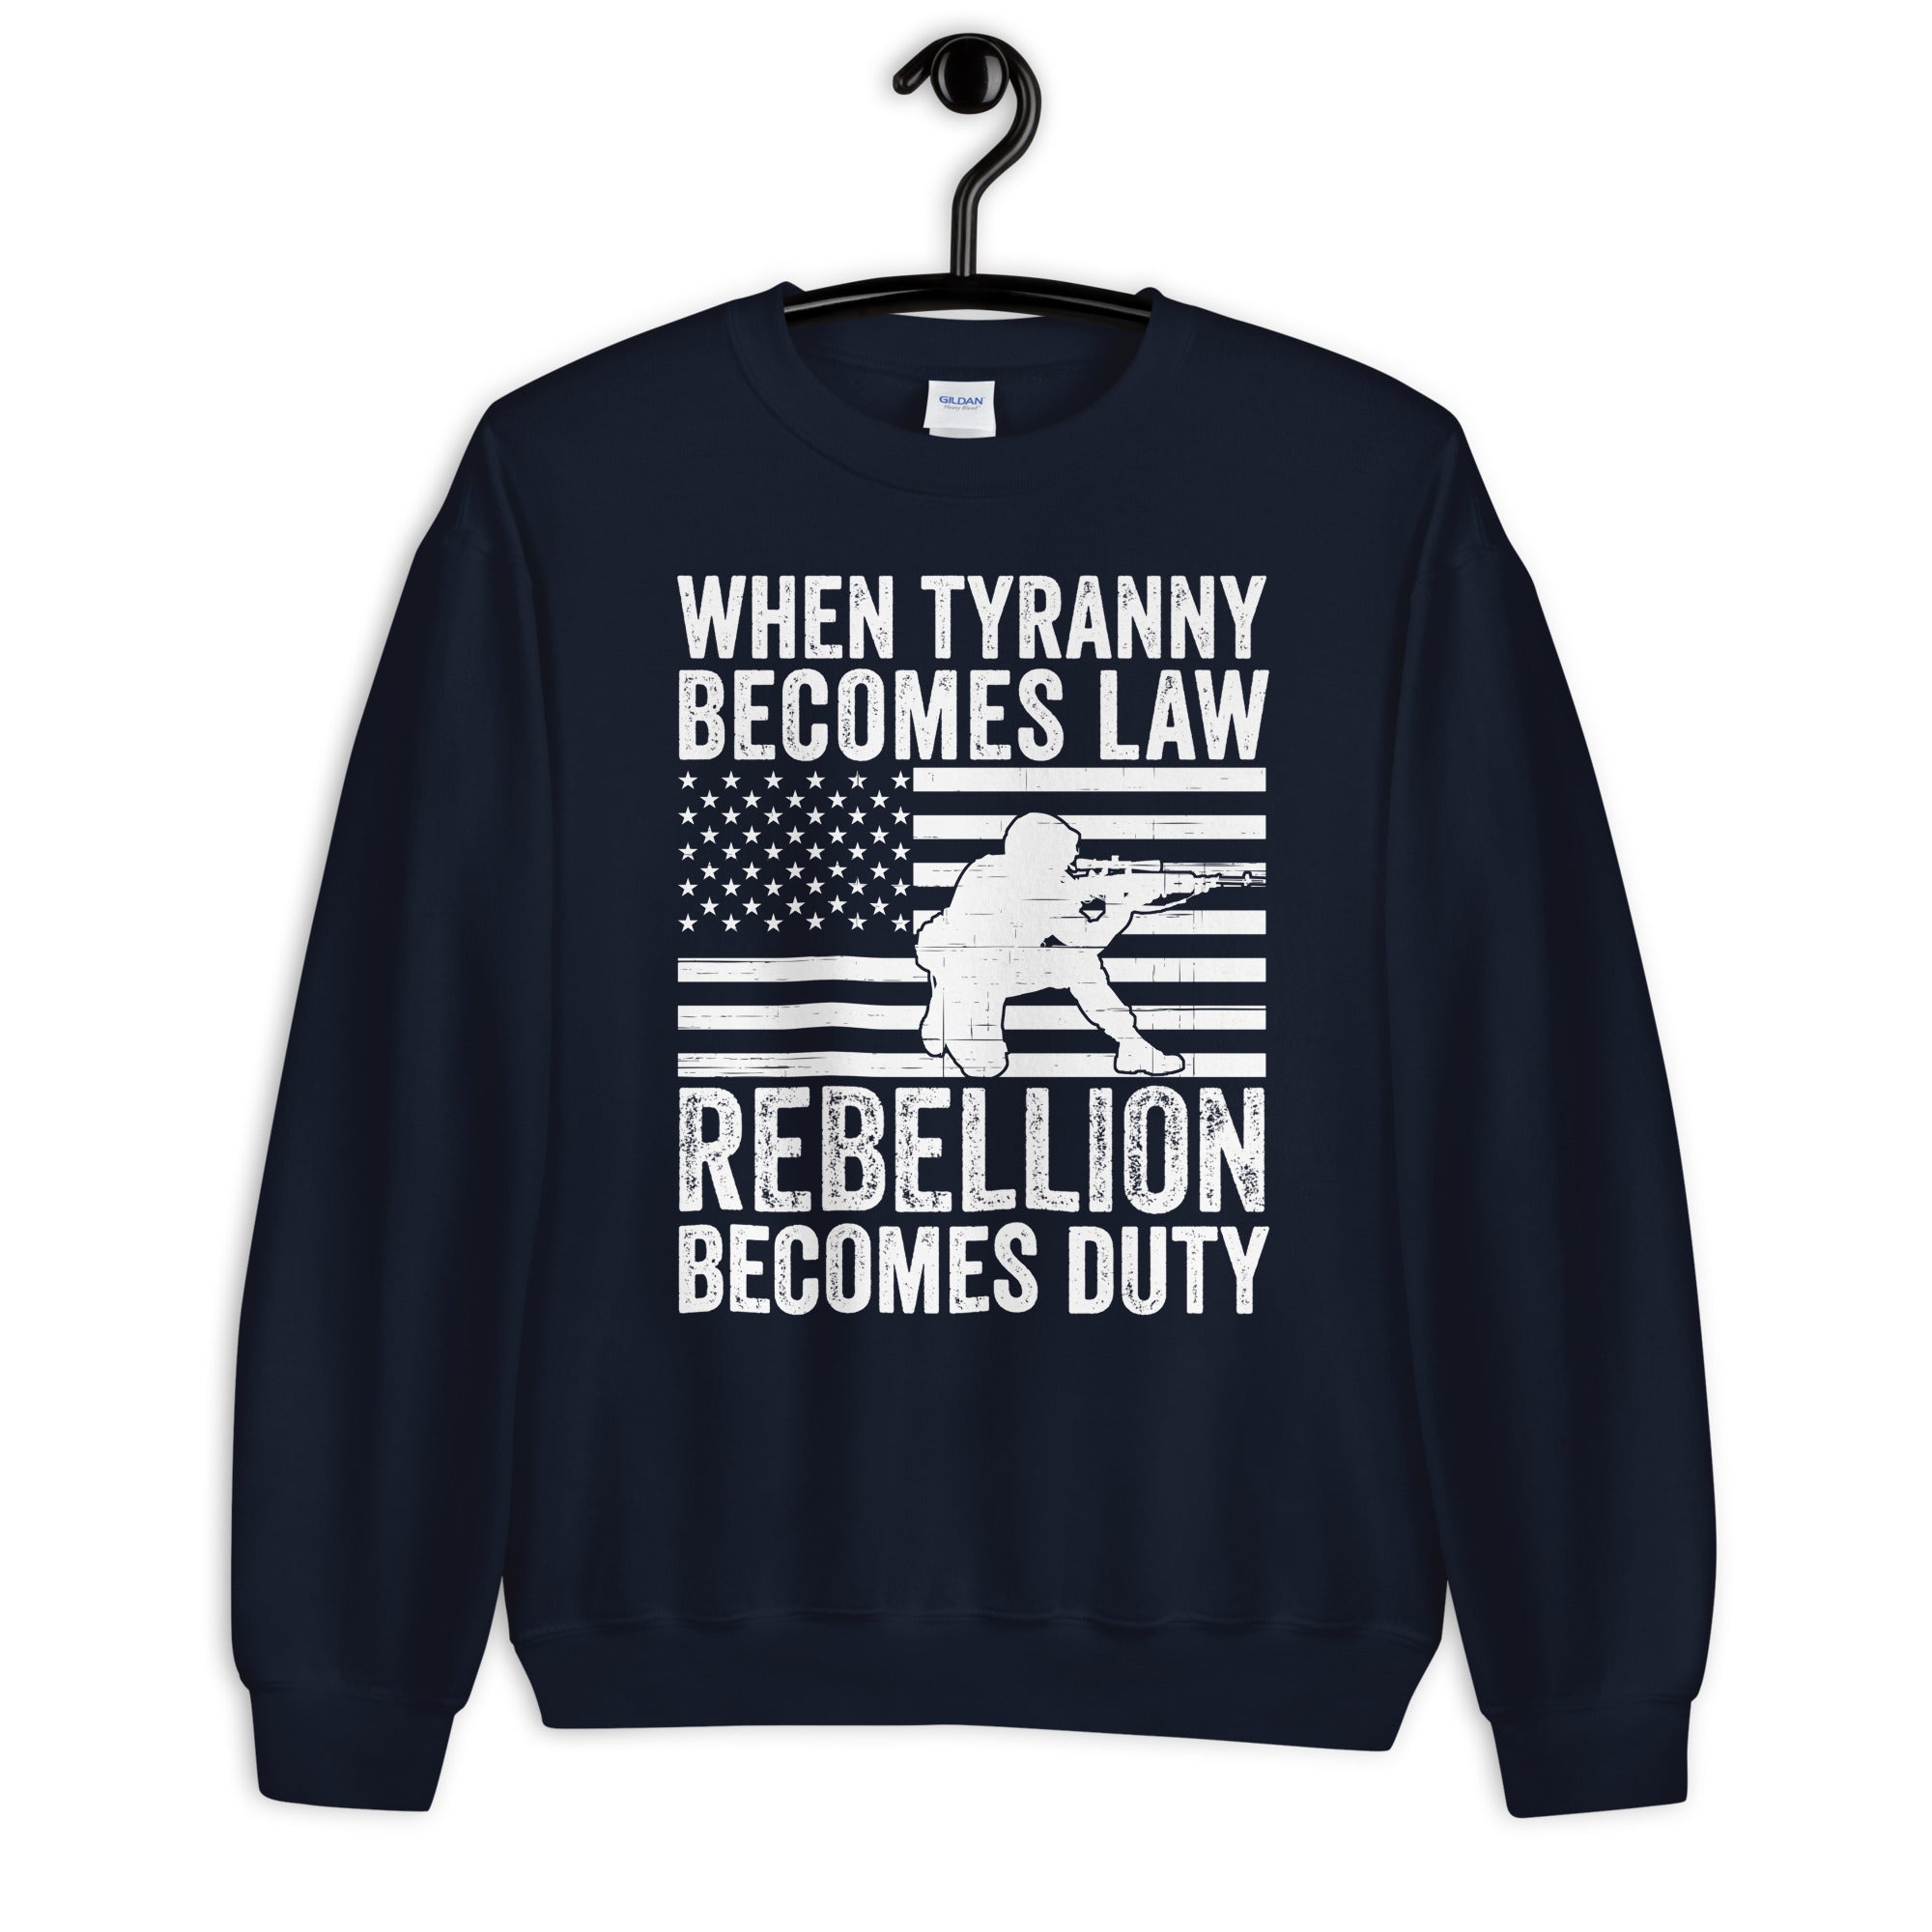 Tyranny Sweater, Rebellion Sweatshirt, When Tyranny Becomes Law, Rebellion Becomes Duty, 1776 Shirt, Thomas Jefferson, Political Shirts